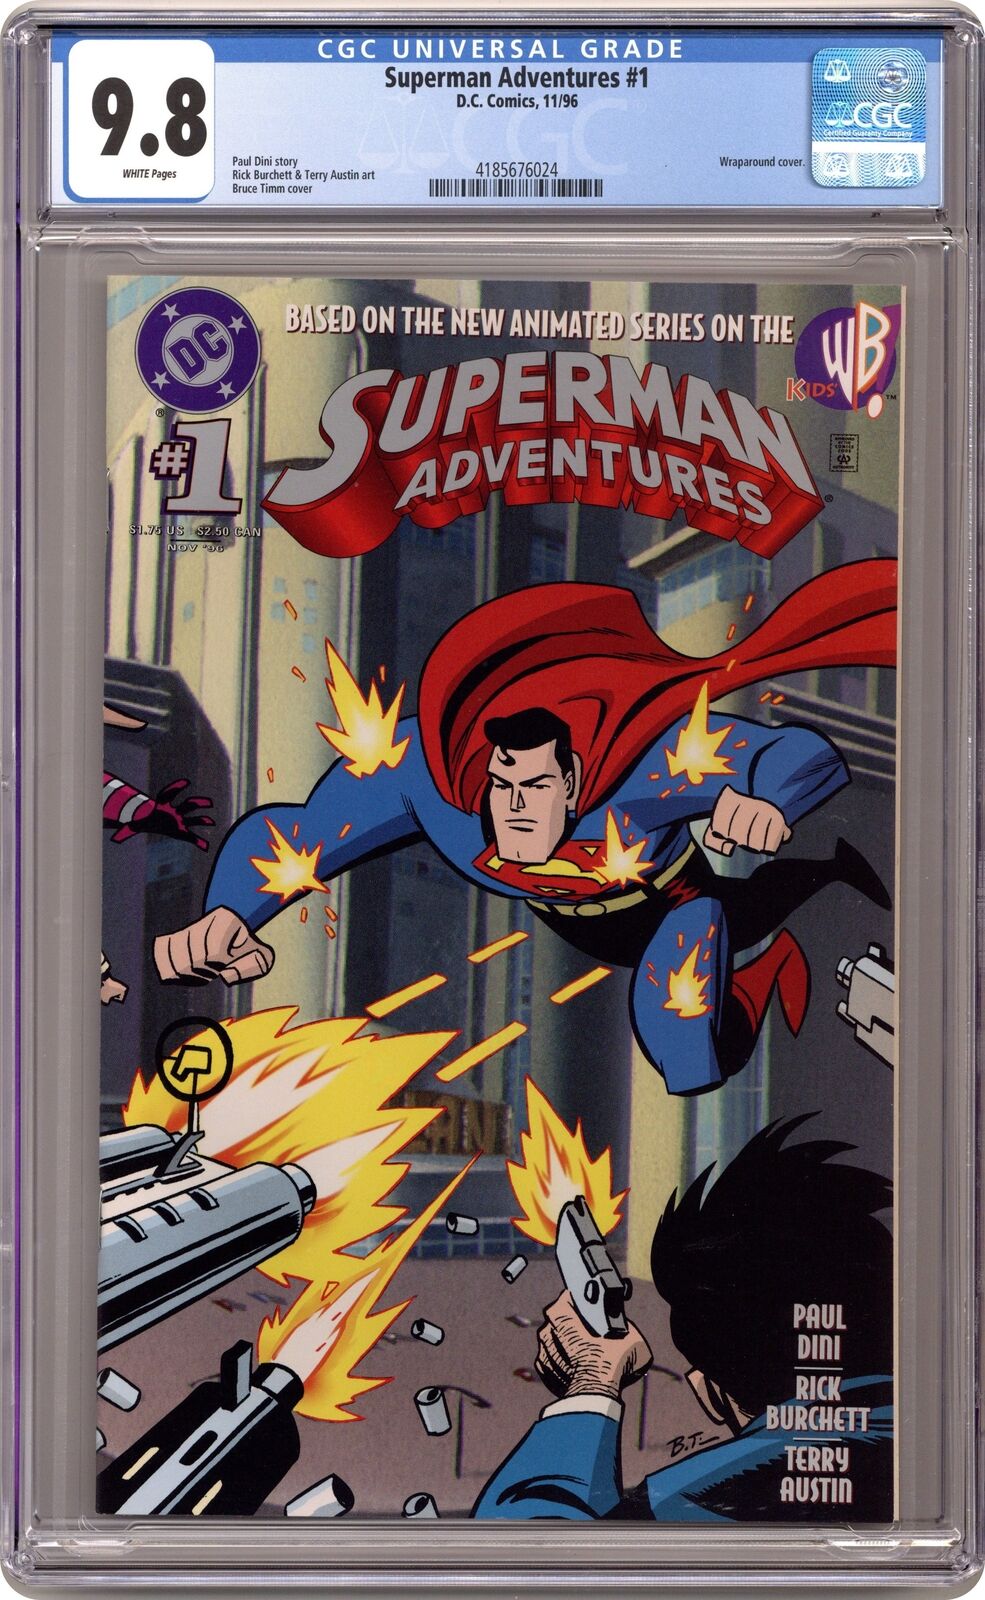 Superman Adventures #1 CGC 9.8 1996 4185676024